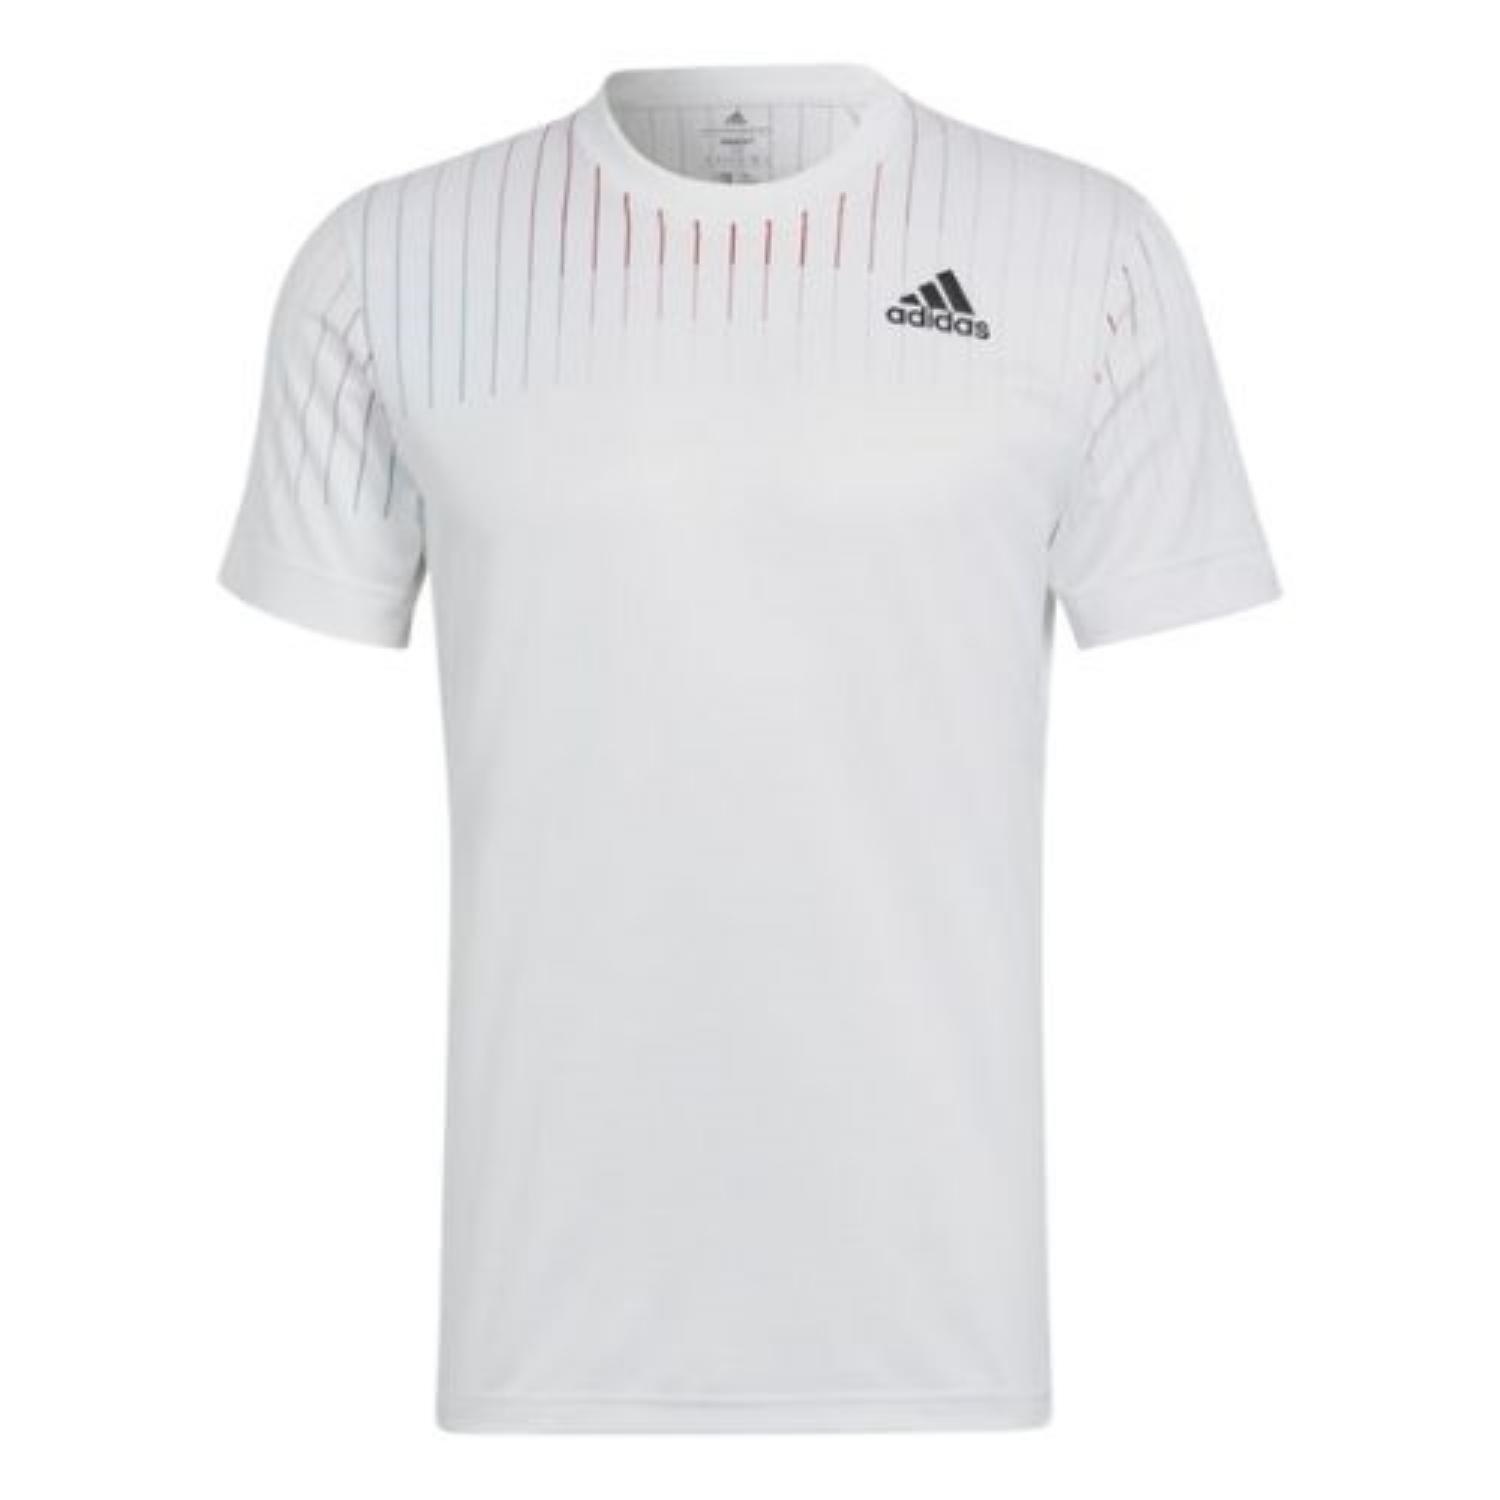 Dialecto heredar celebrar Adidas Melbourne Freelift T-shirt White